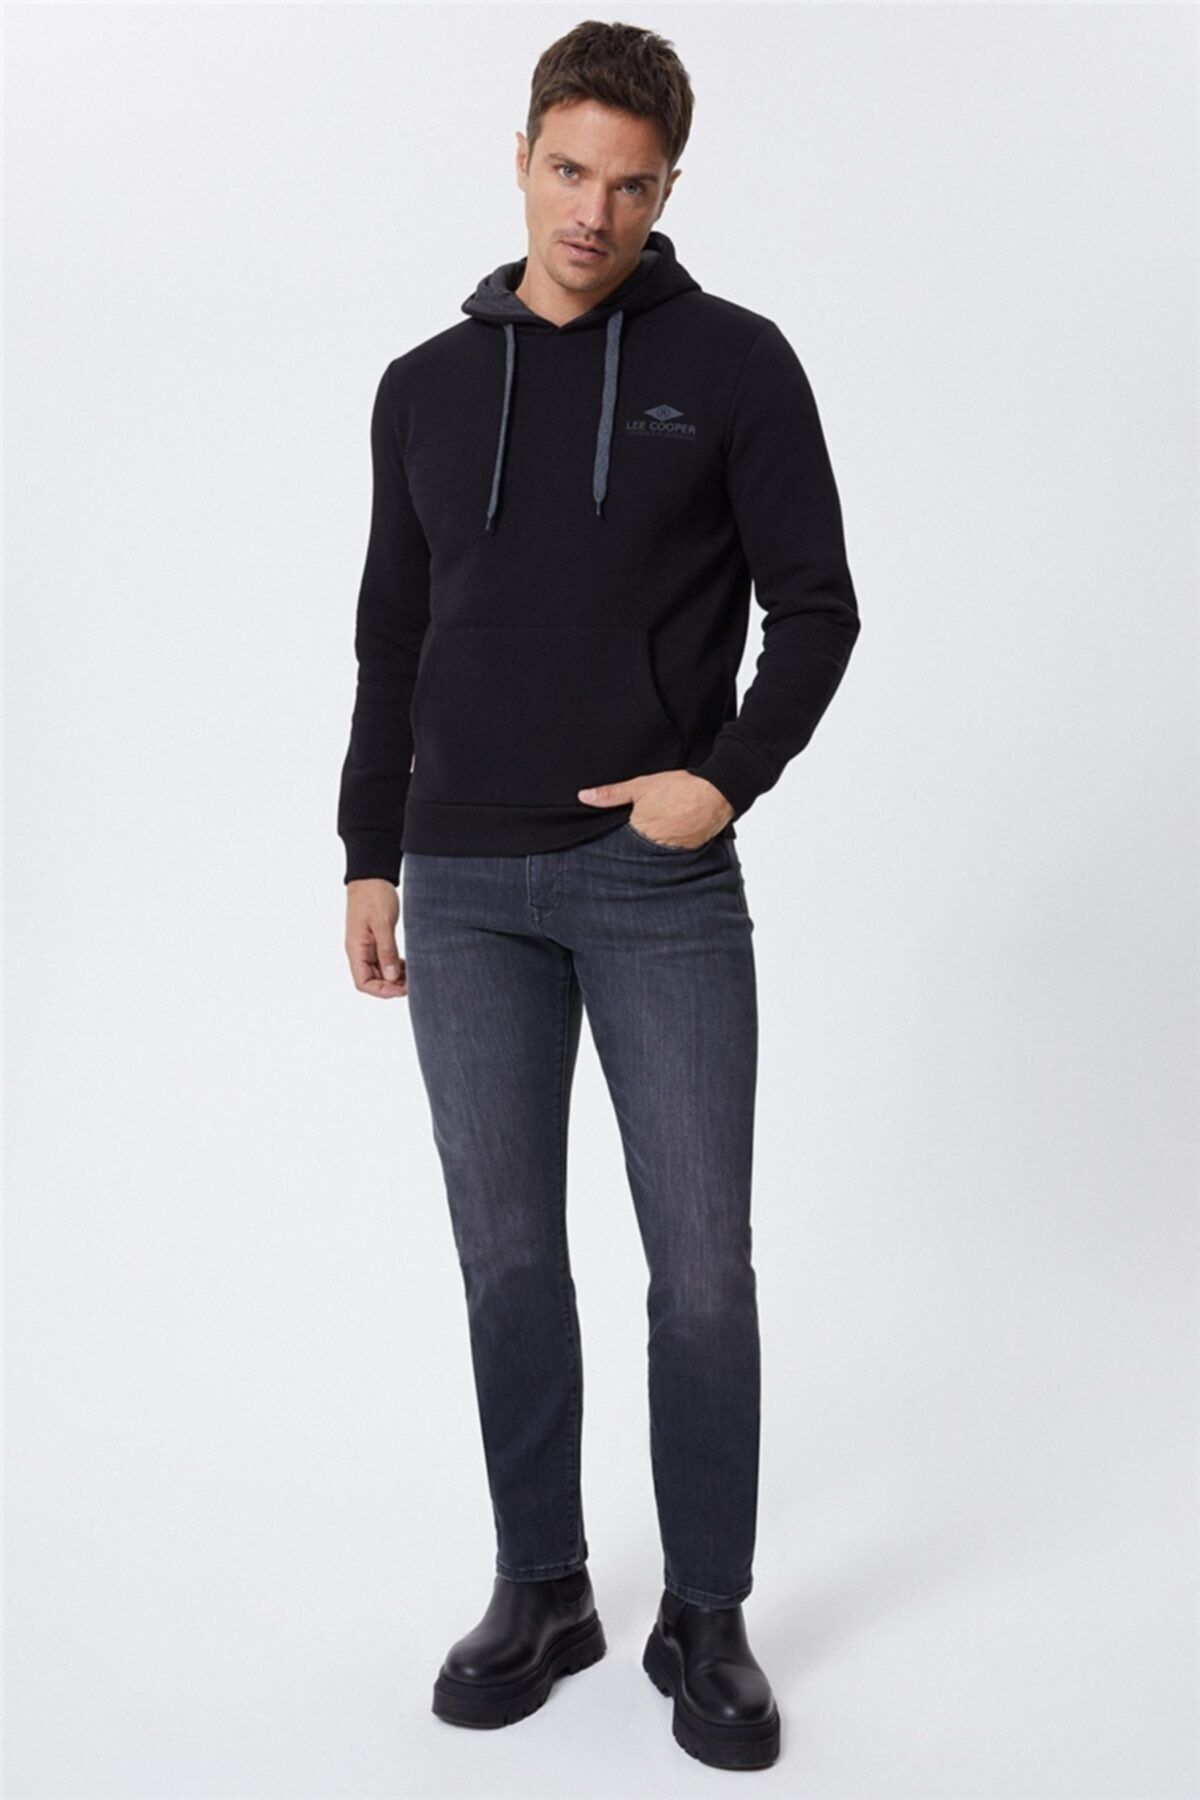 Lee Cooper Erkek Fabian Kapüşonlu Sweatshirt Siyah 221 LCM 241036